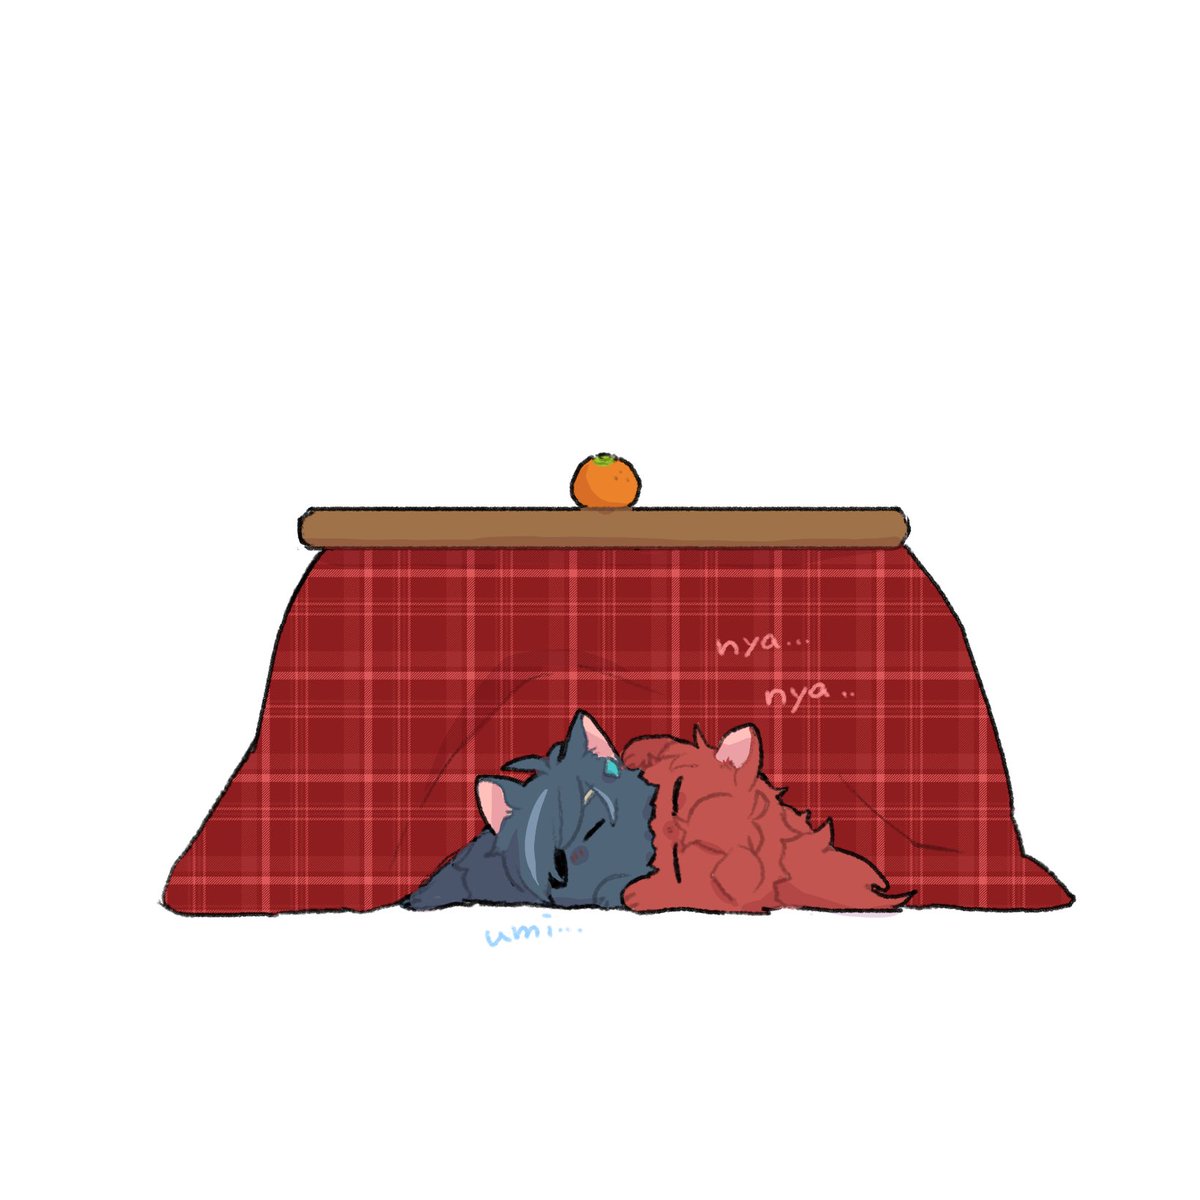 diluc (genshin impact) ,kaeya (genshin impact) table fruit kotatsu food no humans animalization eyepatch  illustration images